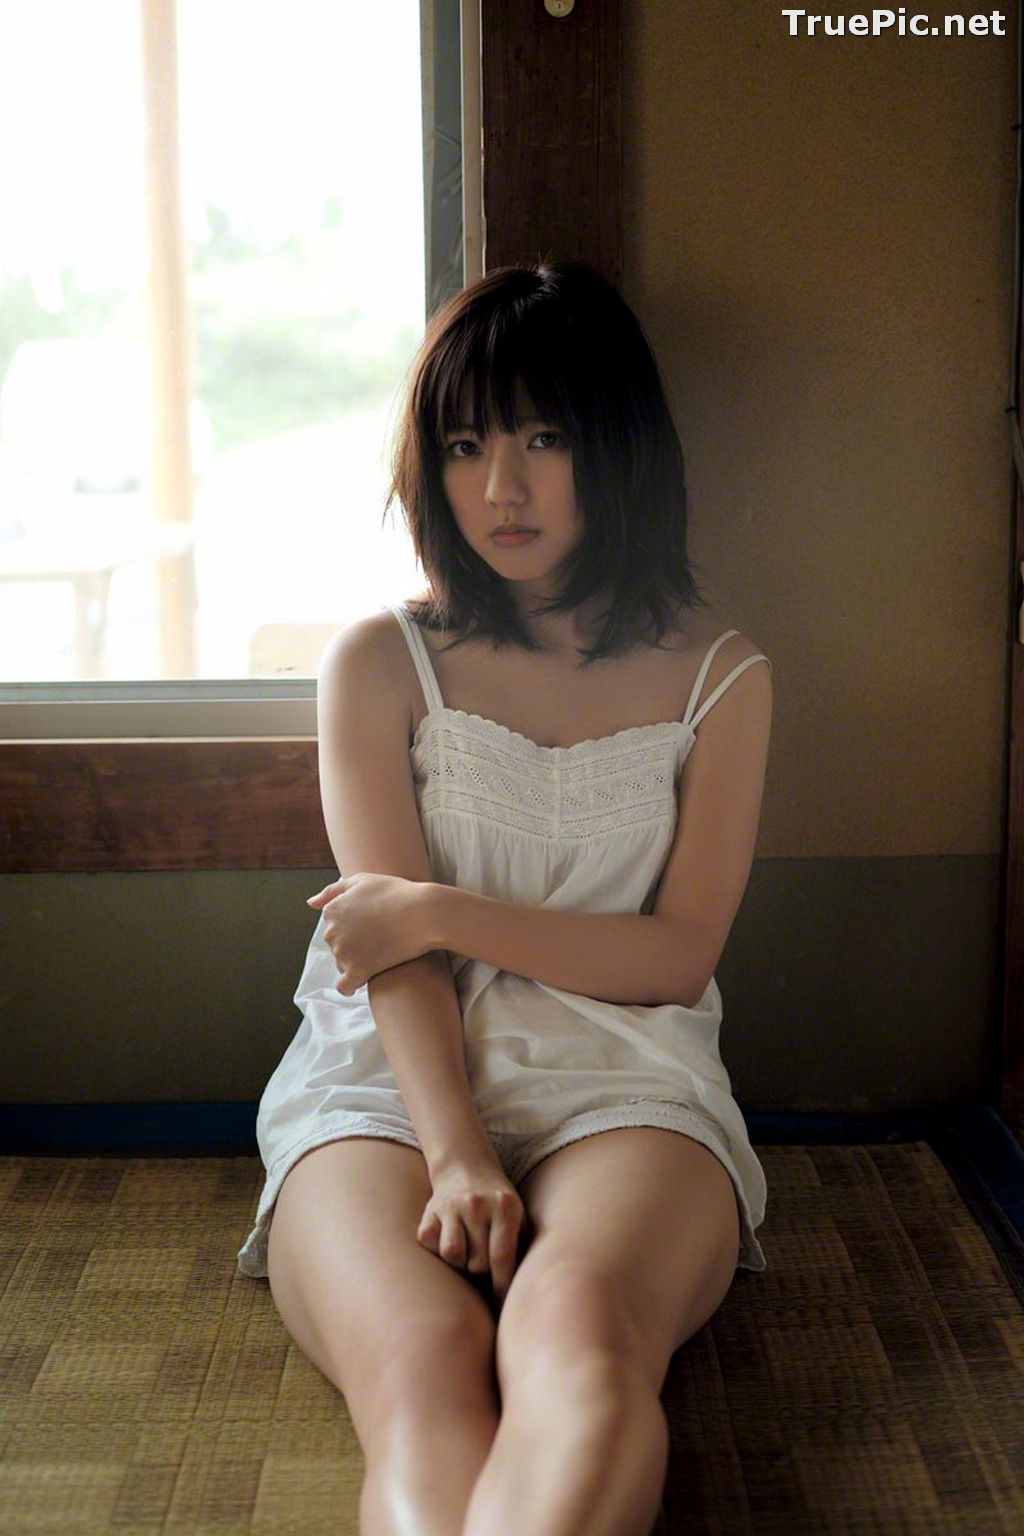 Image Wanibooks No.130 - Japanese Idol Singer and Actress - Erina Mano - TruePic.net - Picture-108